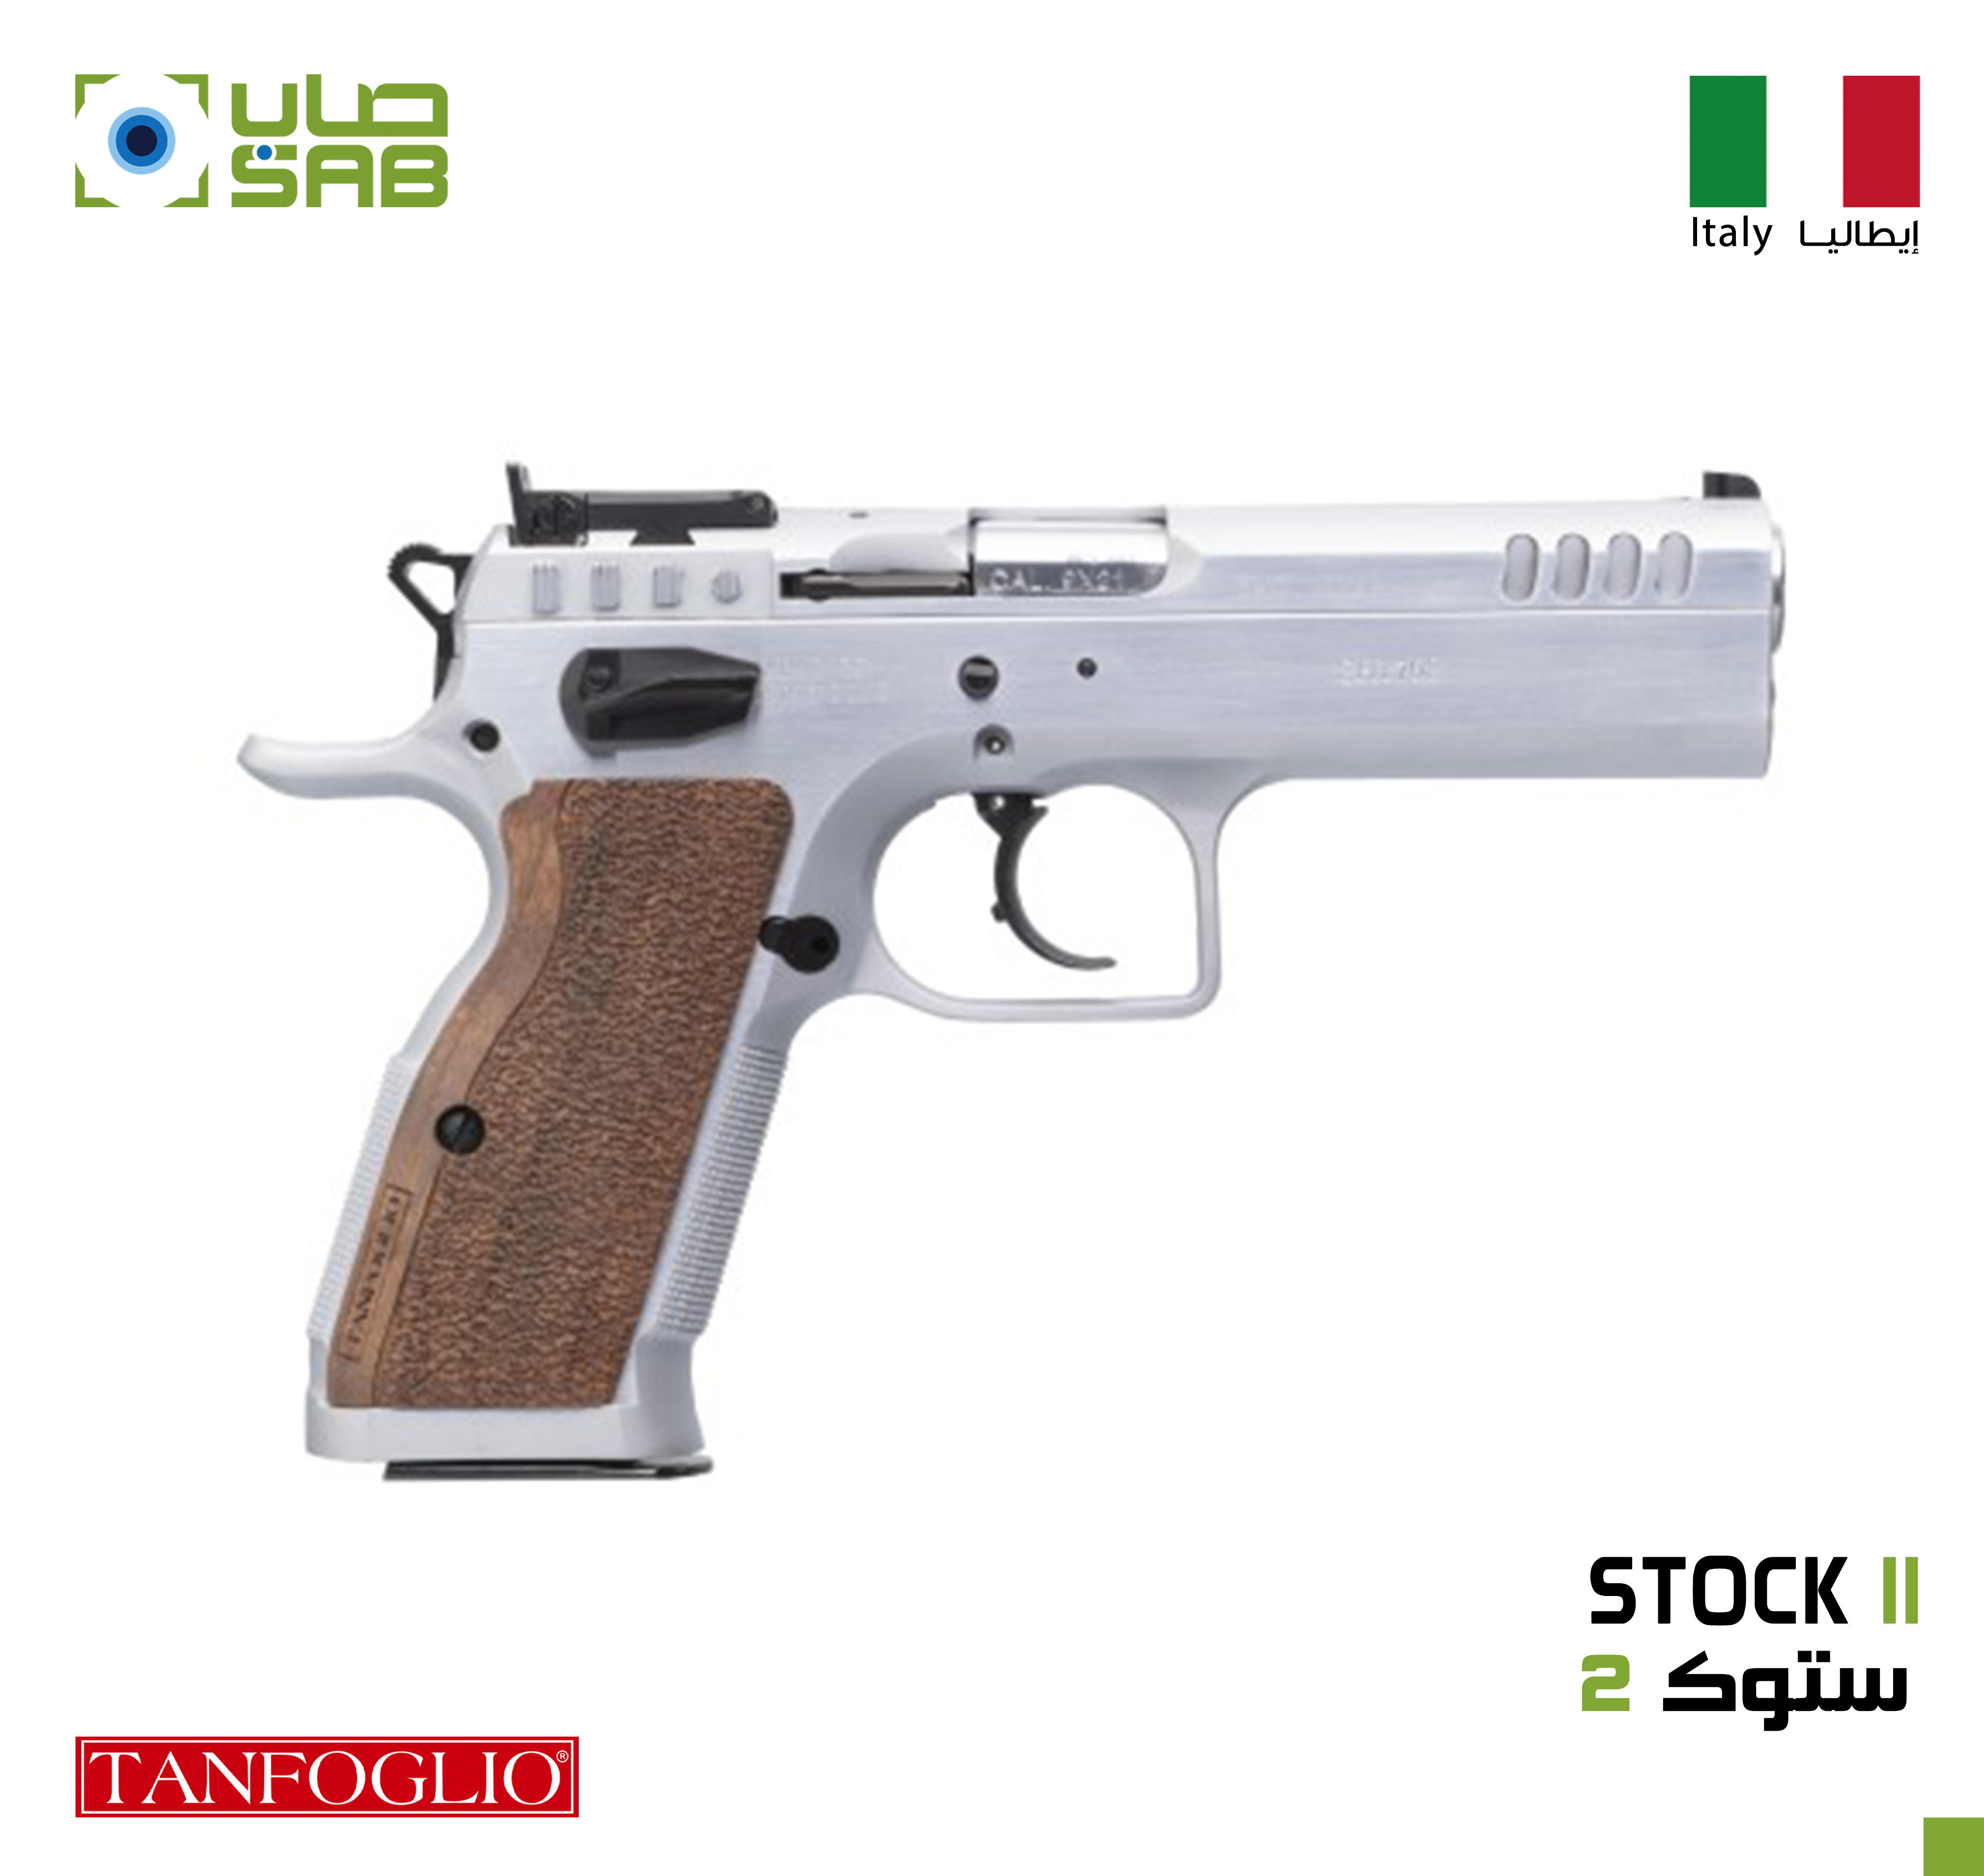  9mm - Tanfoglio - STOCK 2